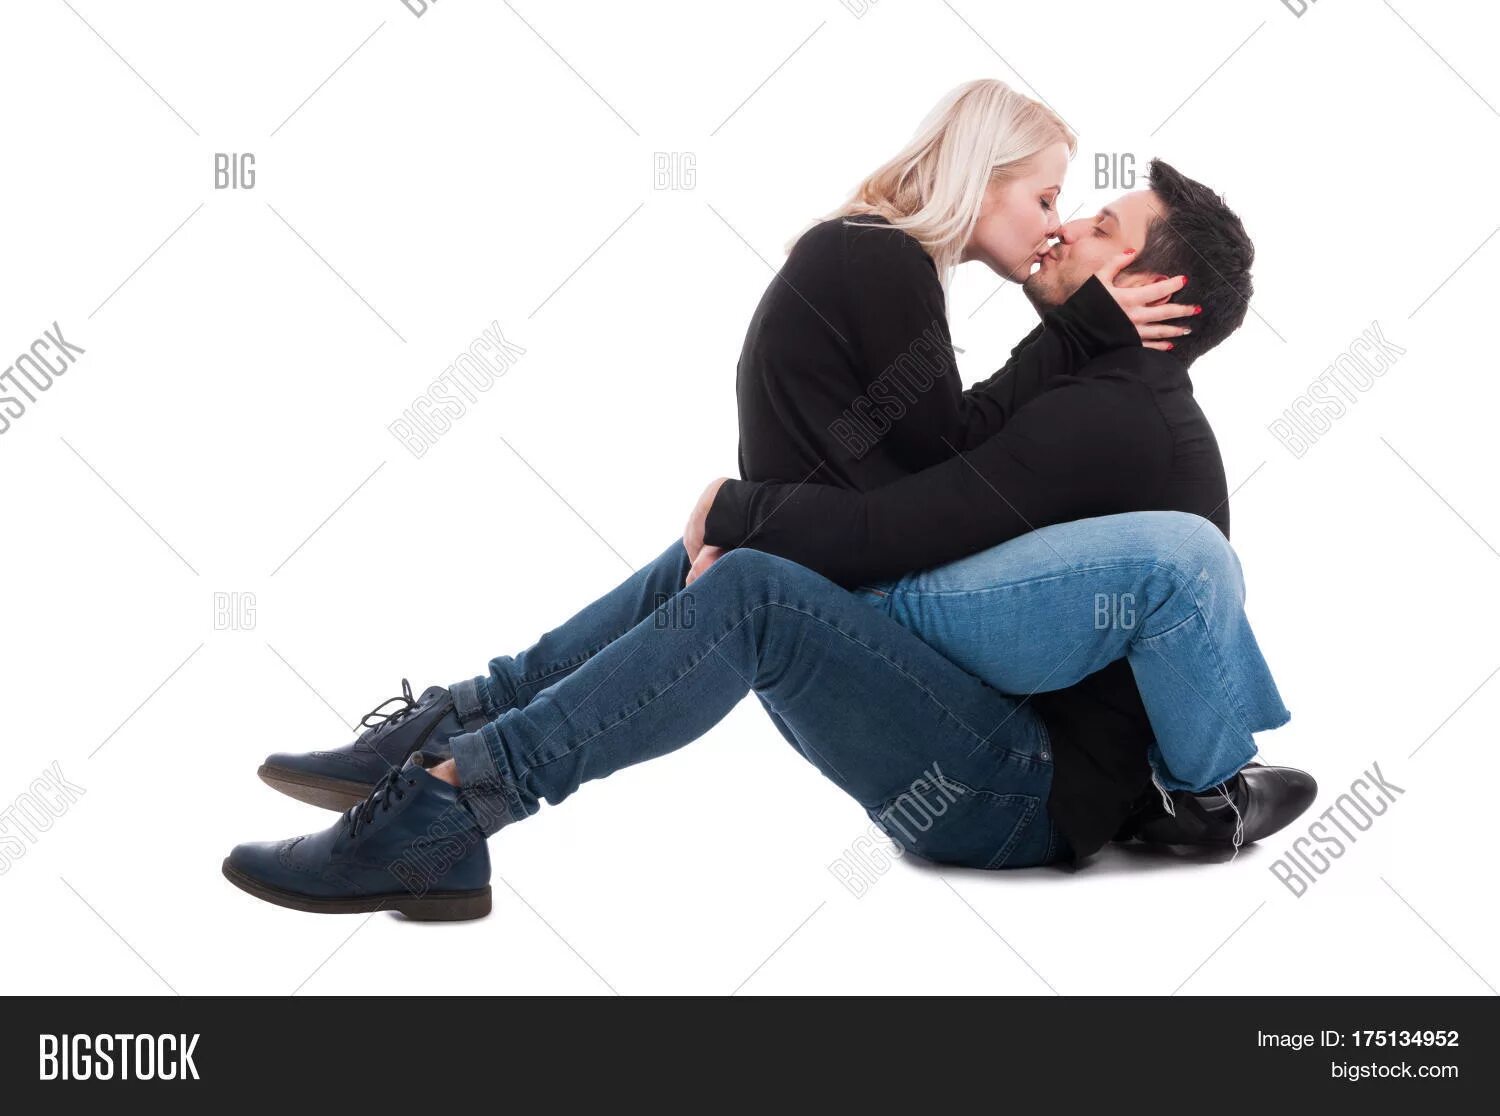 Мужчина обнимает предмет. Два человека сидят на полу и обнимаются. Сидит месте обнимать. Пара сидящая в молчанке.